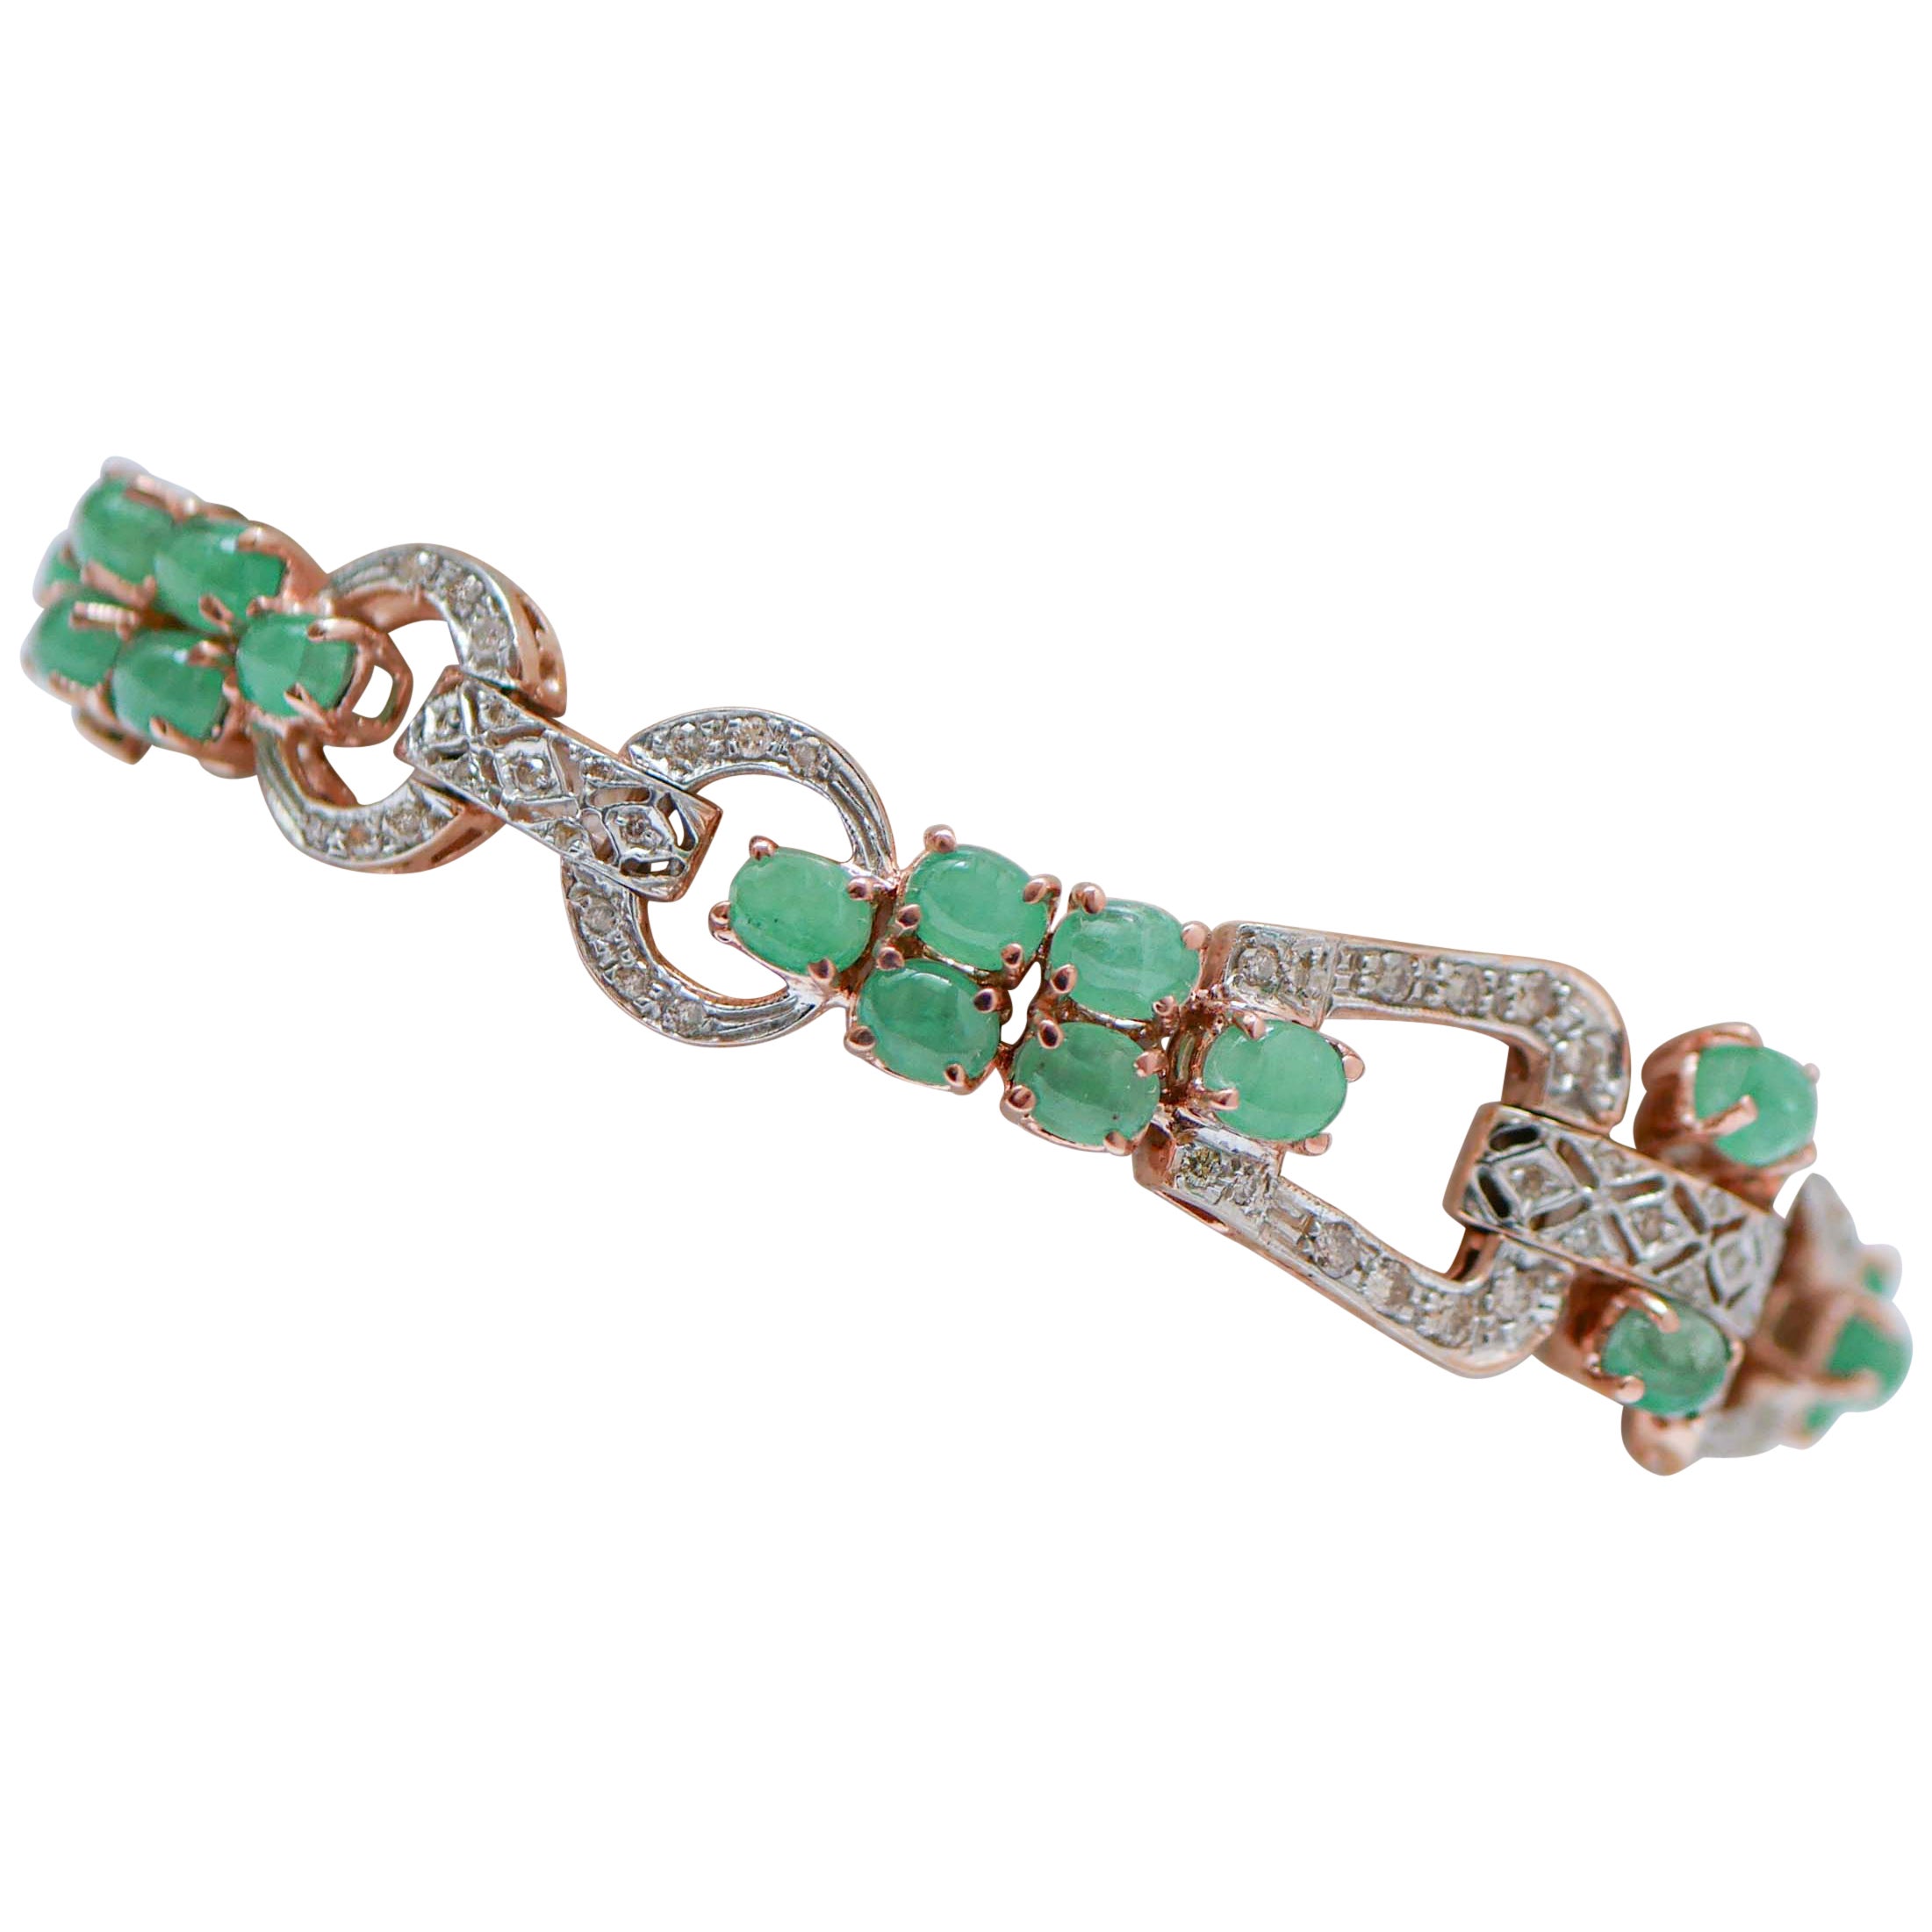 Emeralds, Diamonds, Rose Gold and Silver Bracelet.